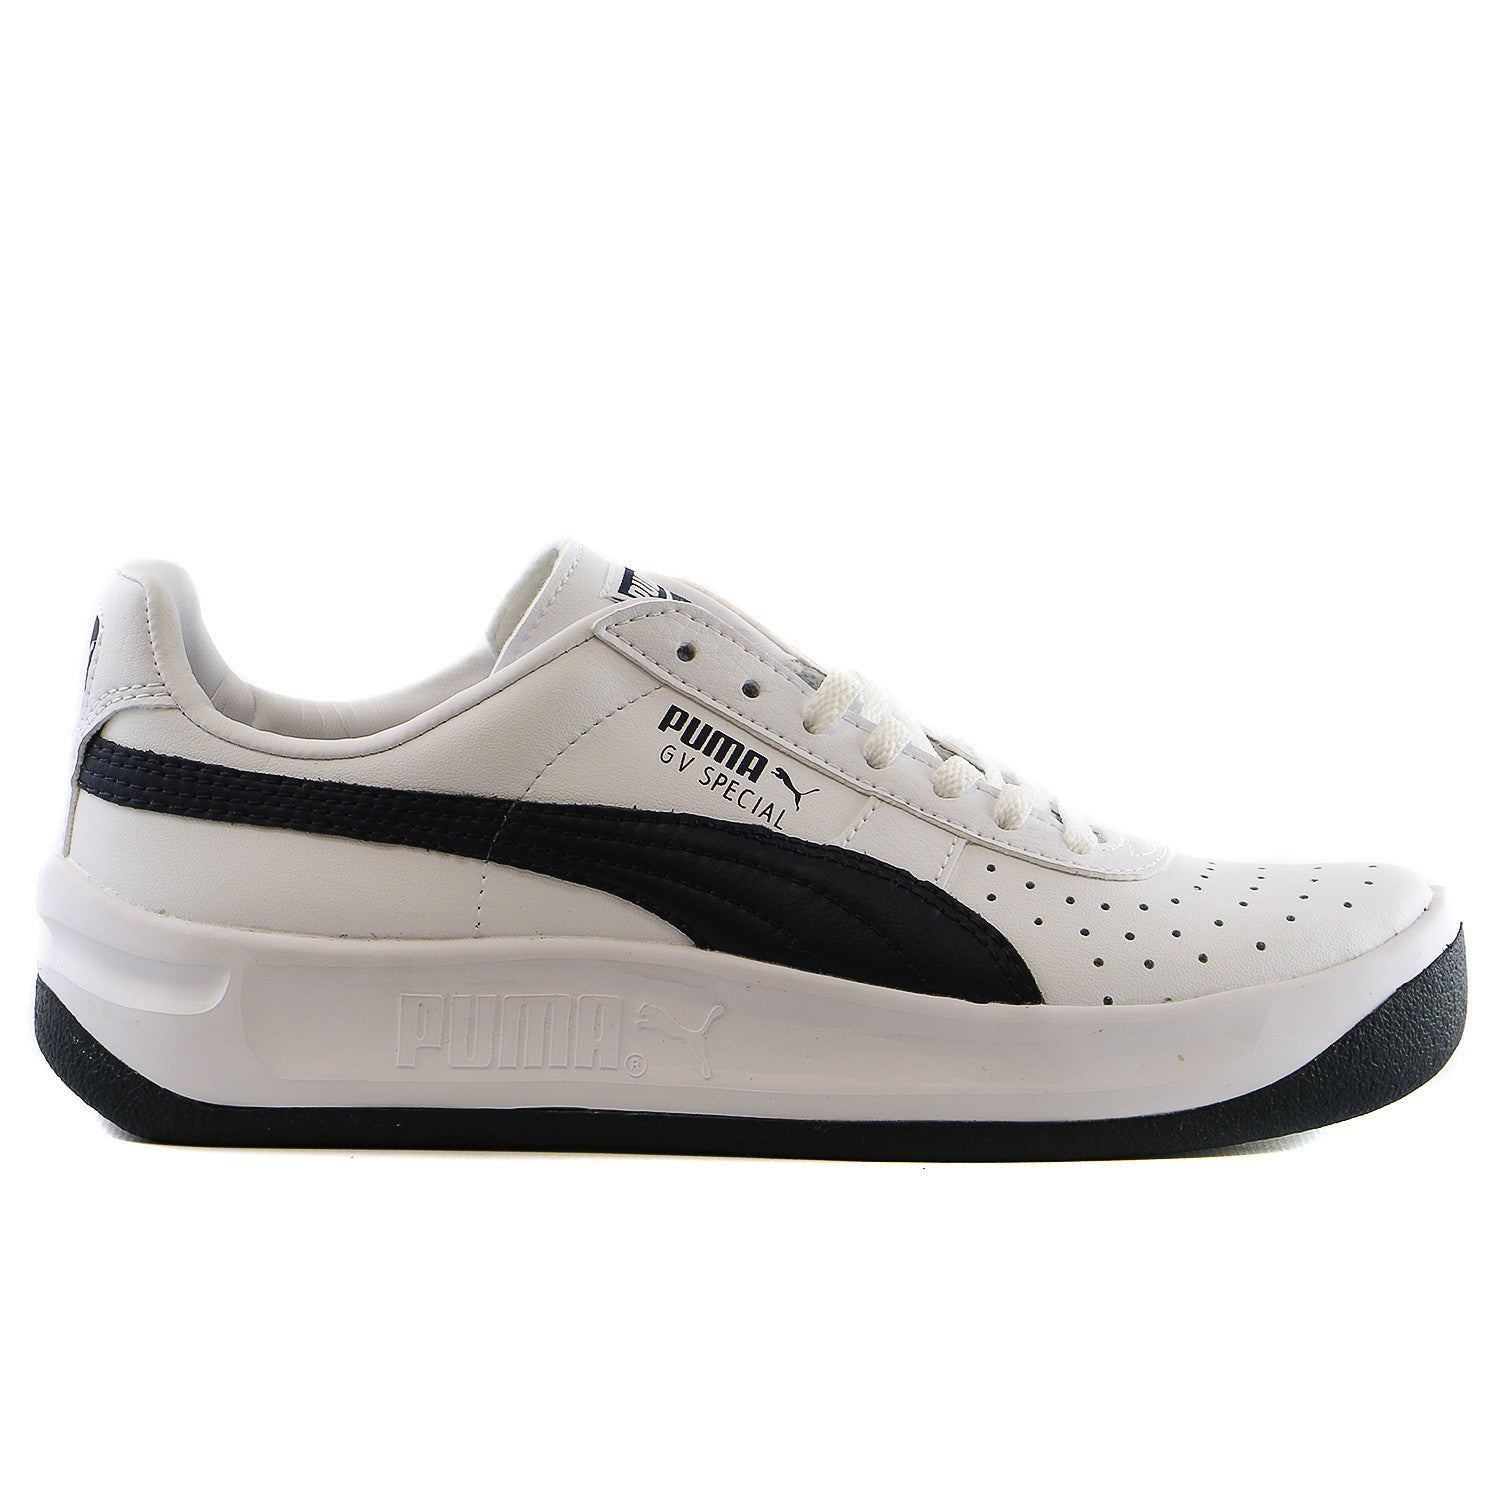 Shoplifestyle Puma - White/New Shoes Navy - - GV Boys Special Jr